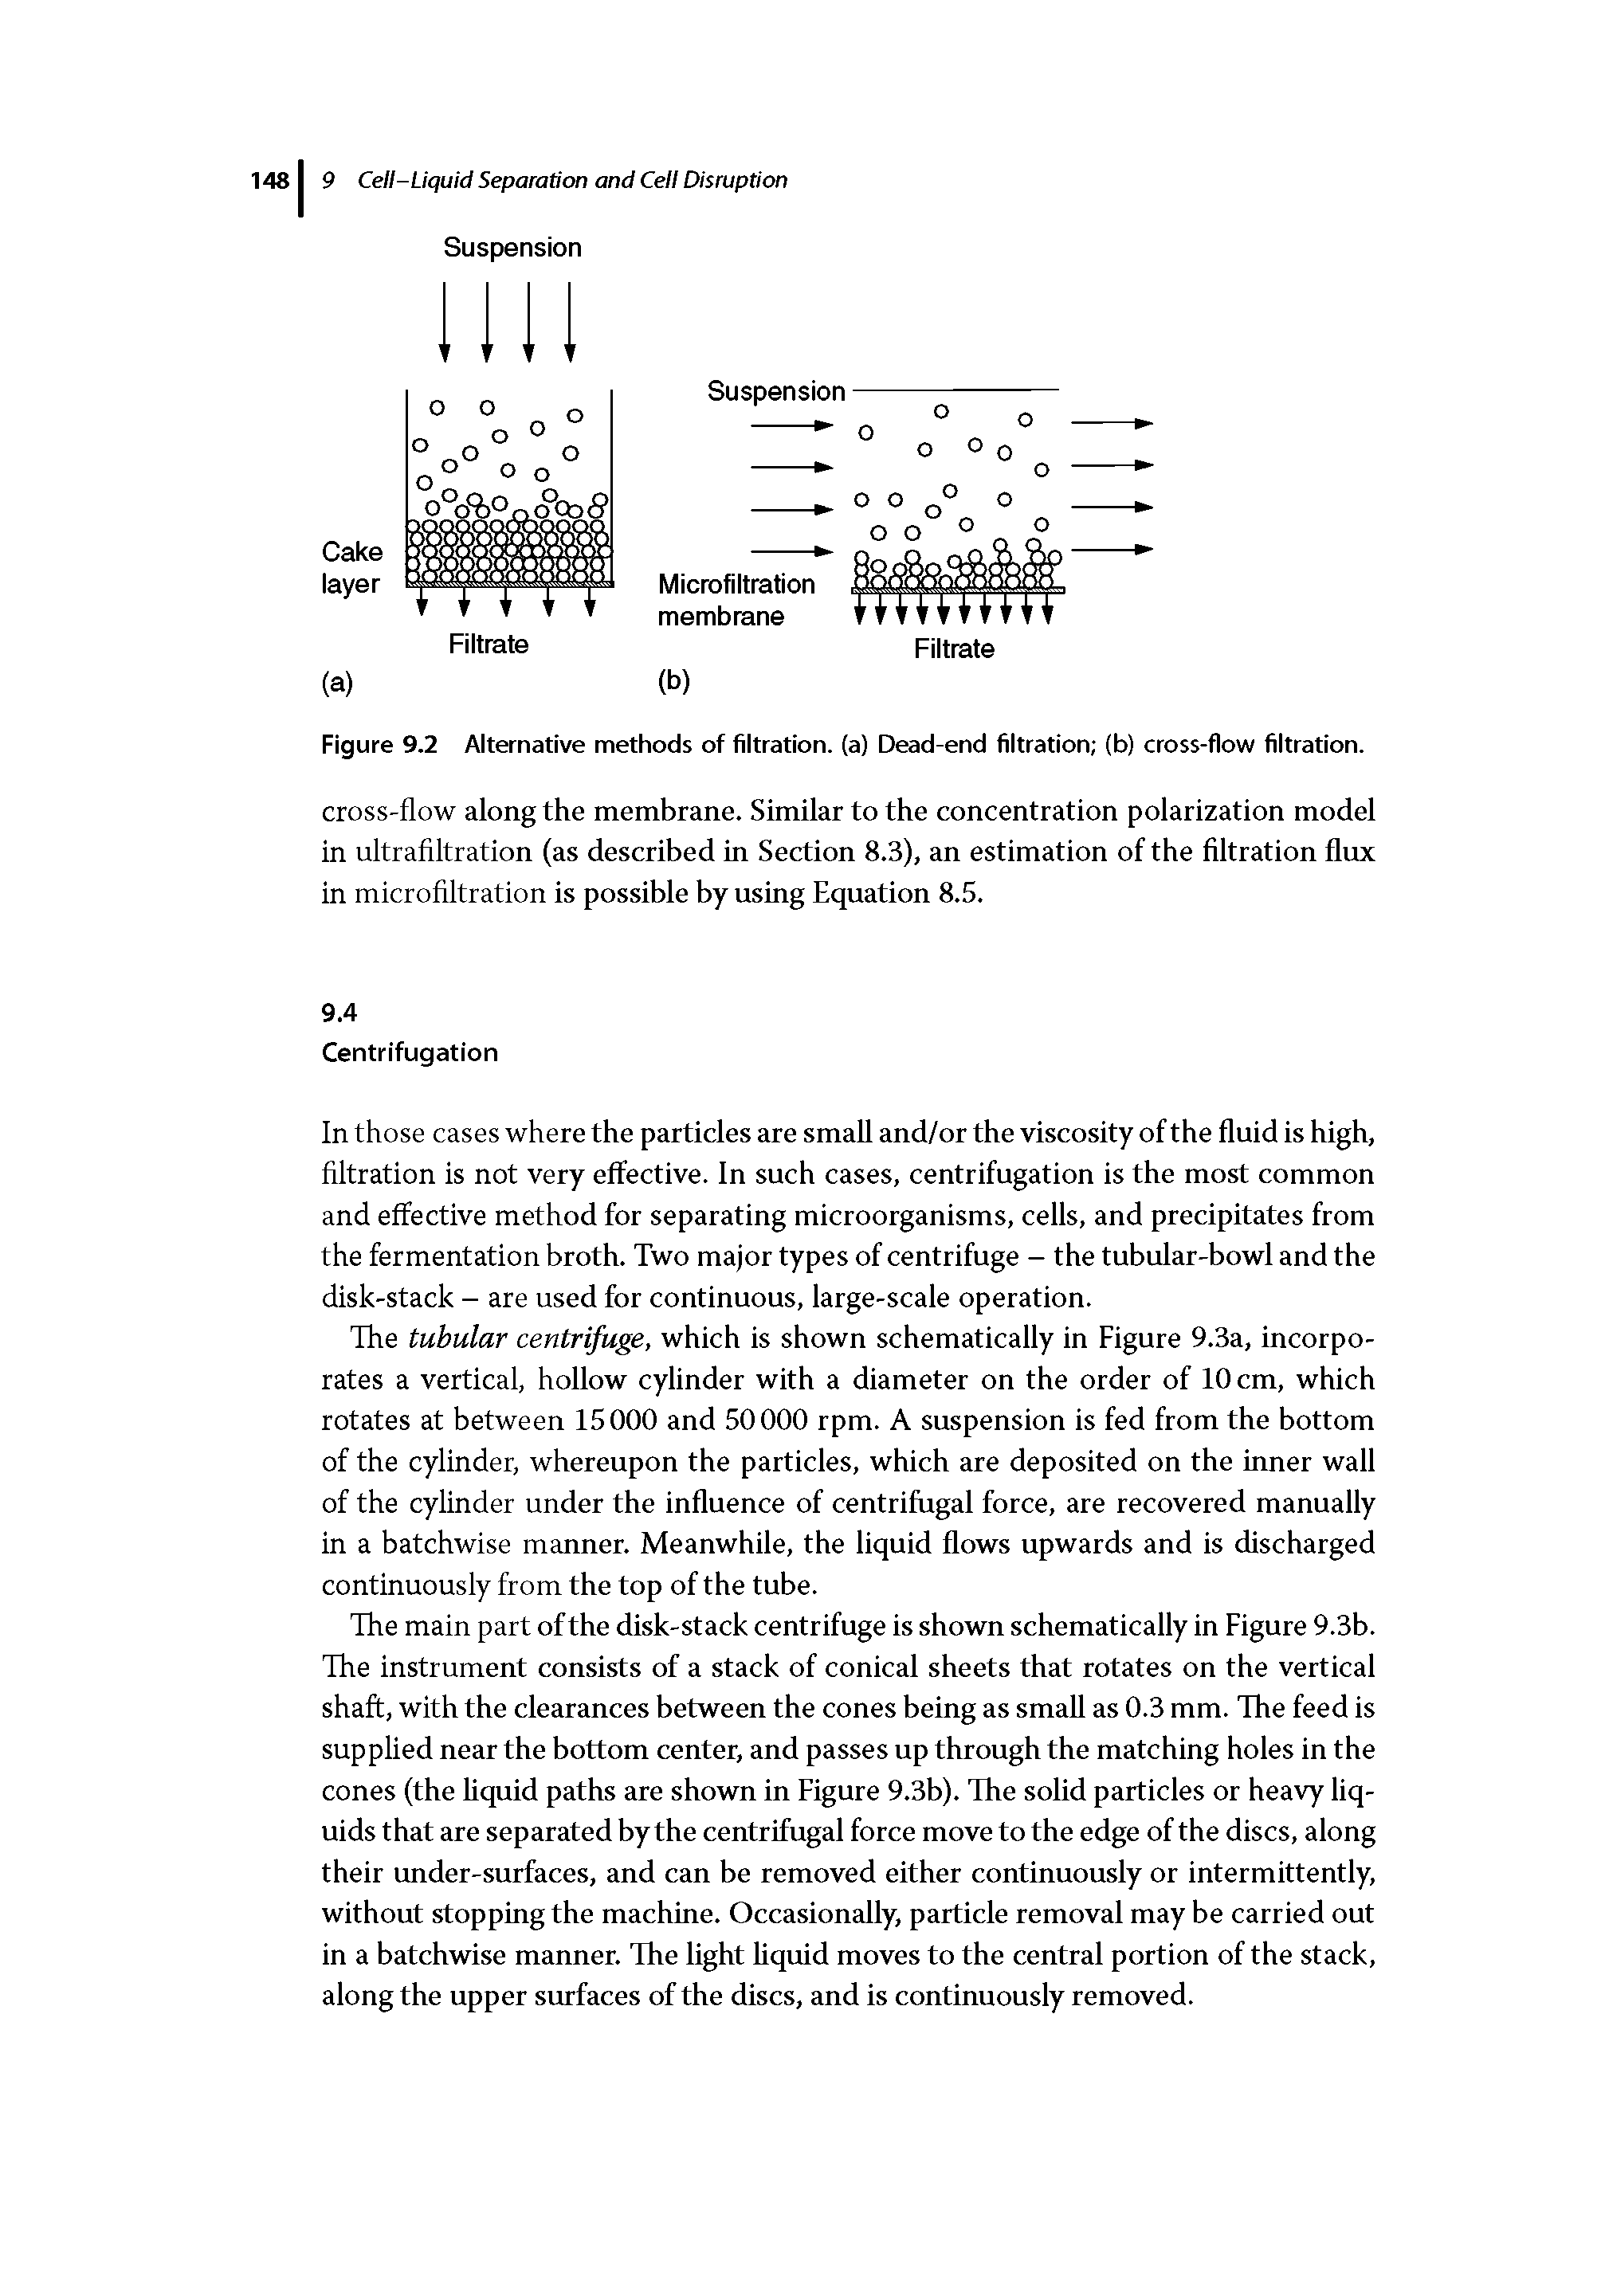 Figure 9.2 Alternative methods of filtration, (a) Dead-end filtration (b) cross-flow filtration.